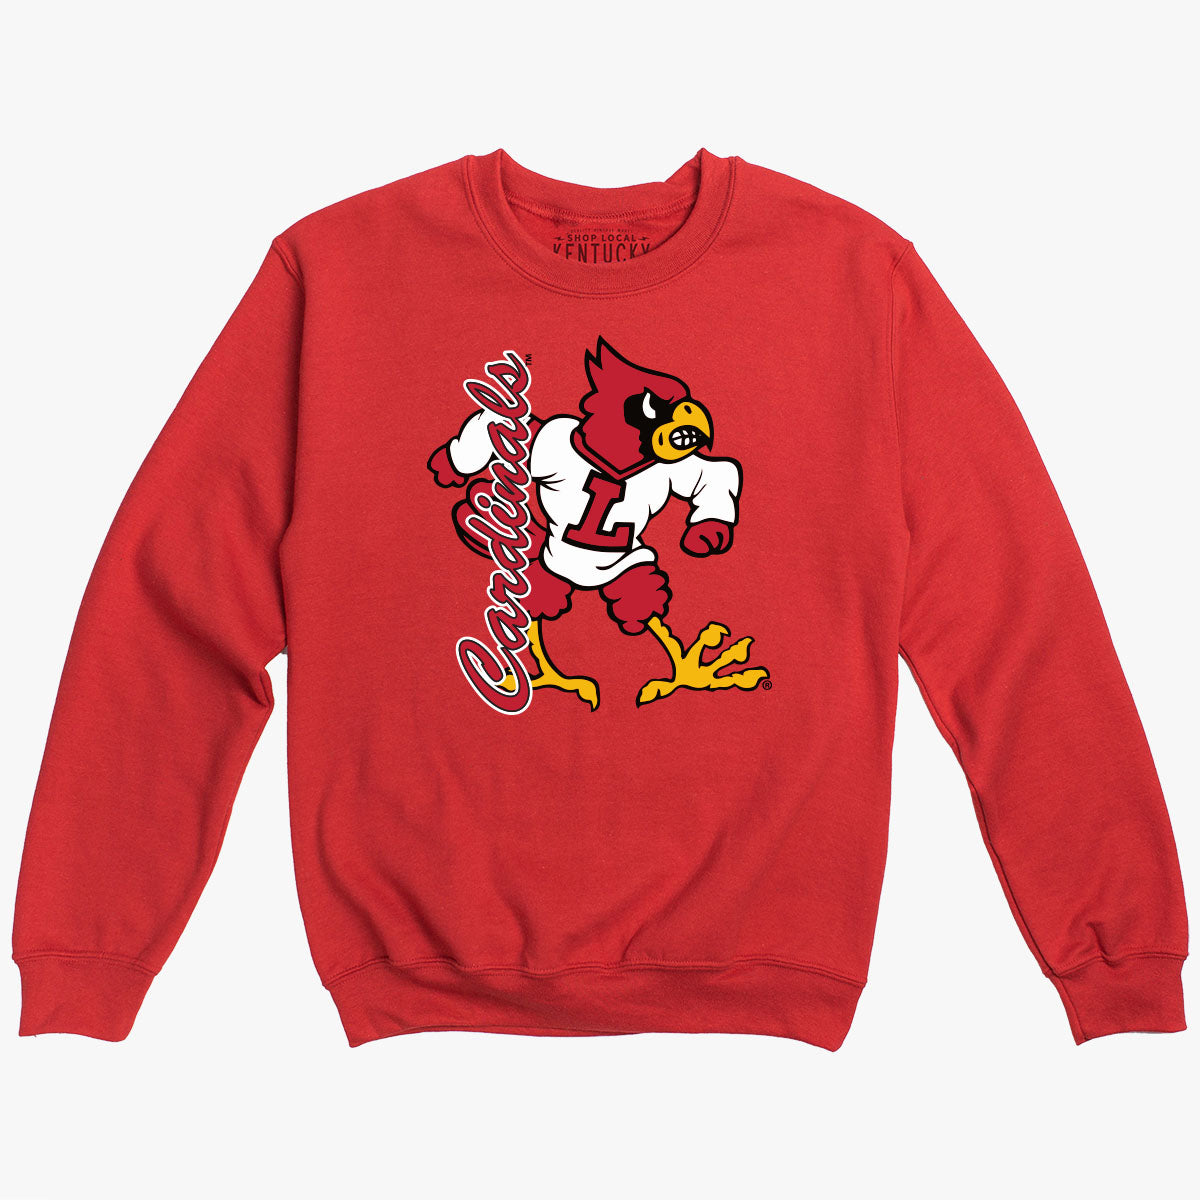 Hottertees 90s Vintage University of Louisville Uofl Sweatshirt